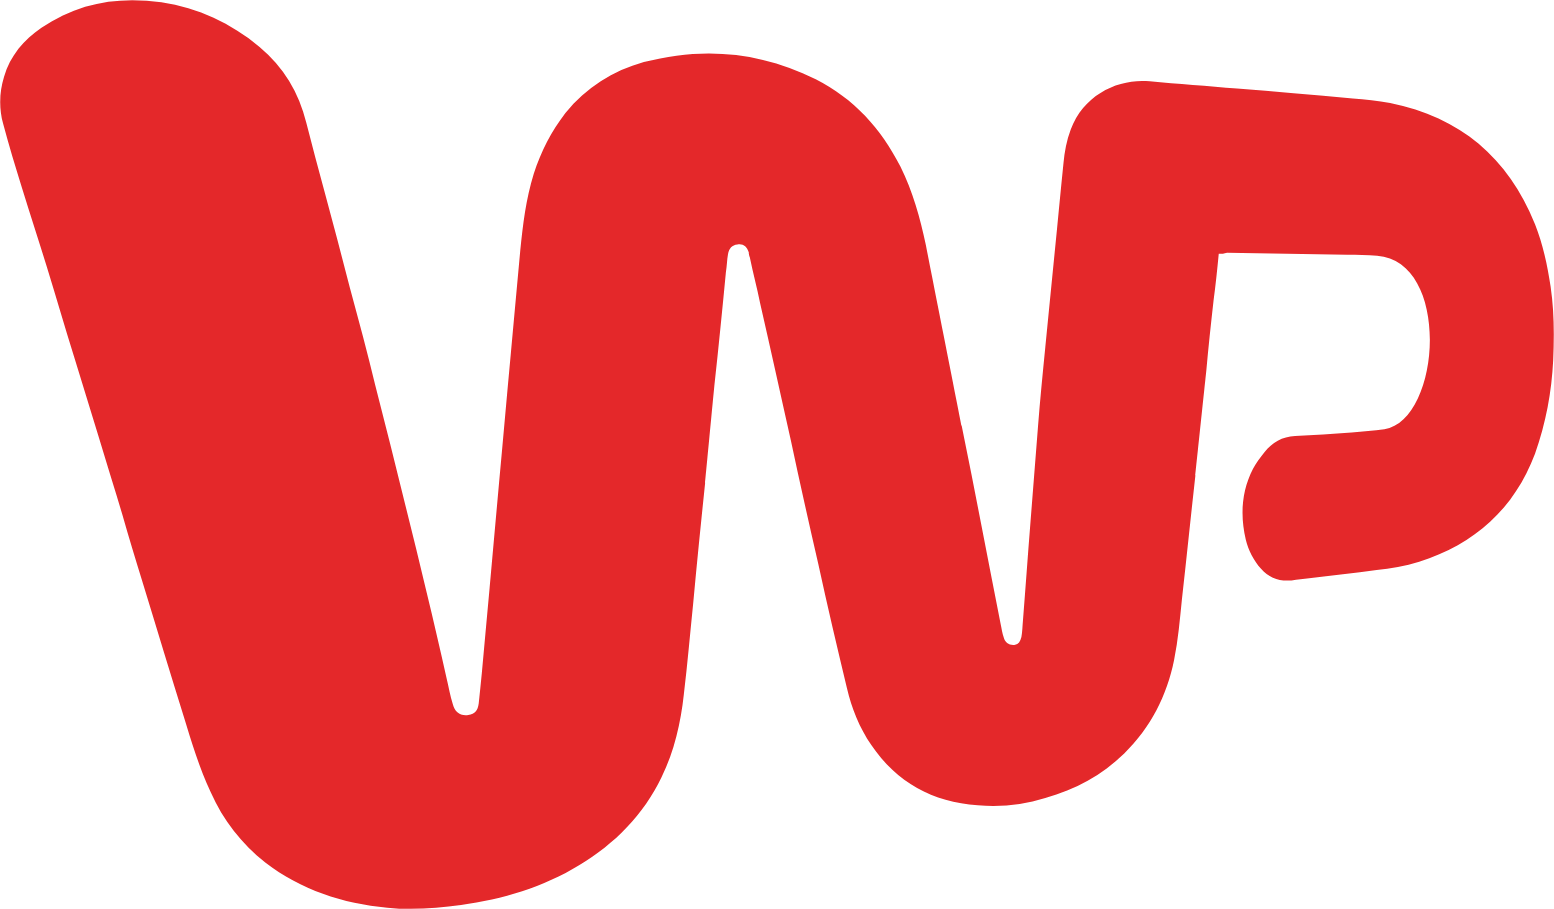 Polska Logo Png Transparent Svg Vector Freebie Supply - vrogue.co